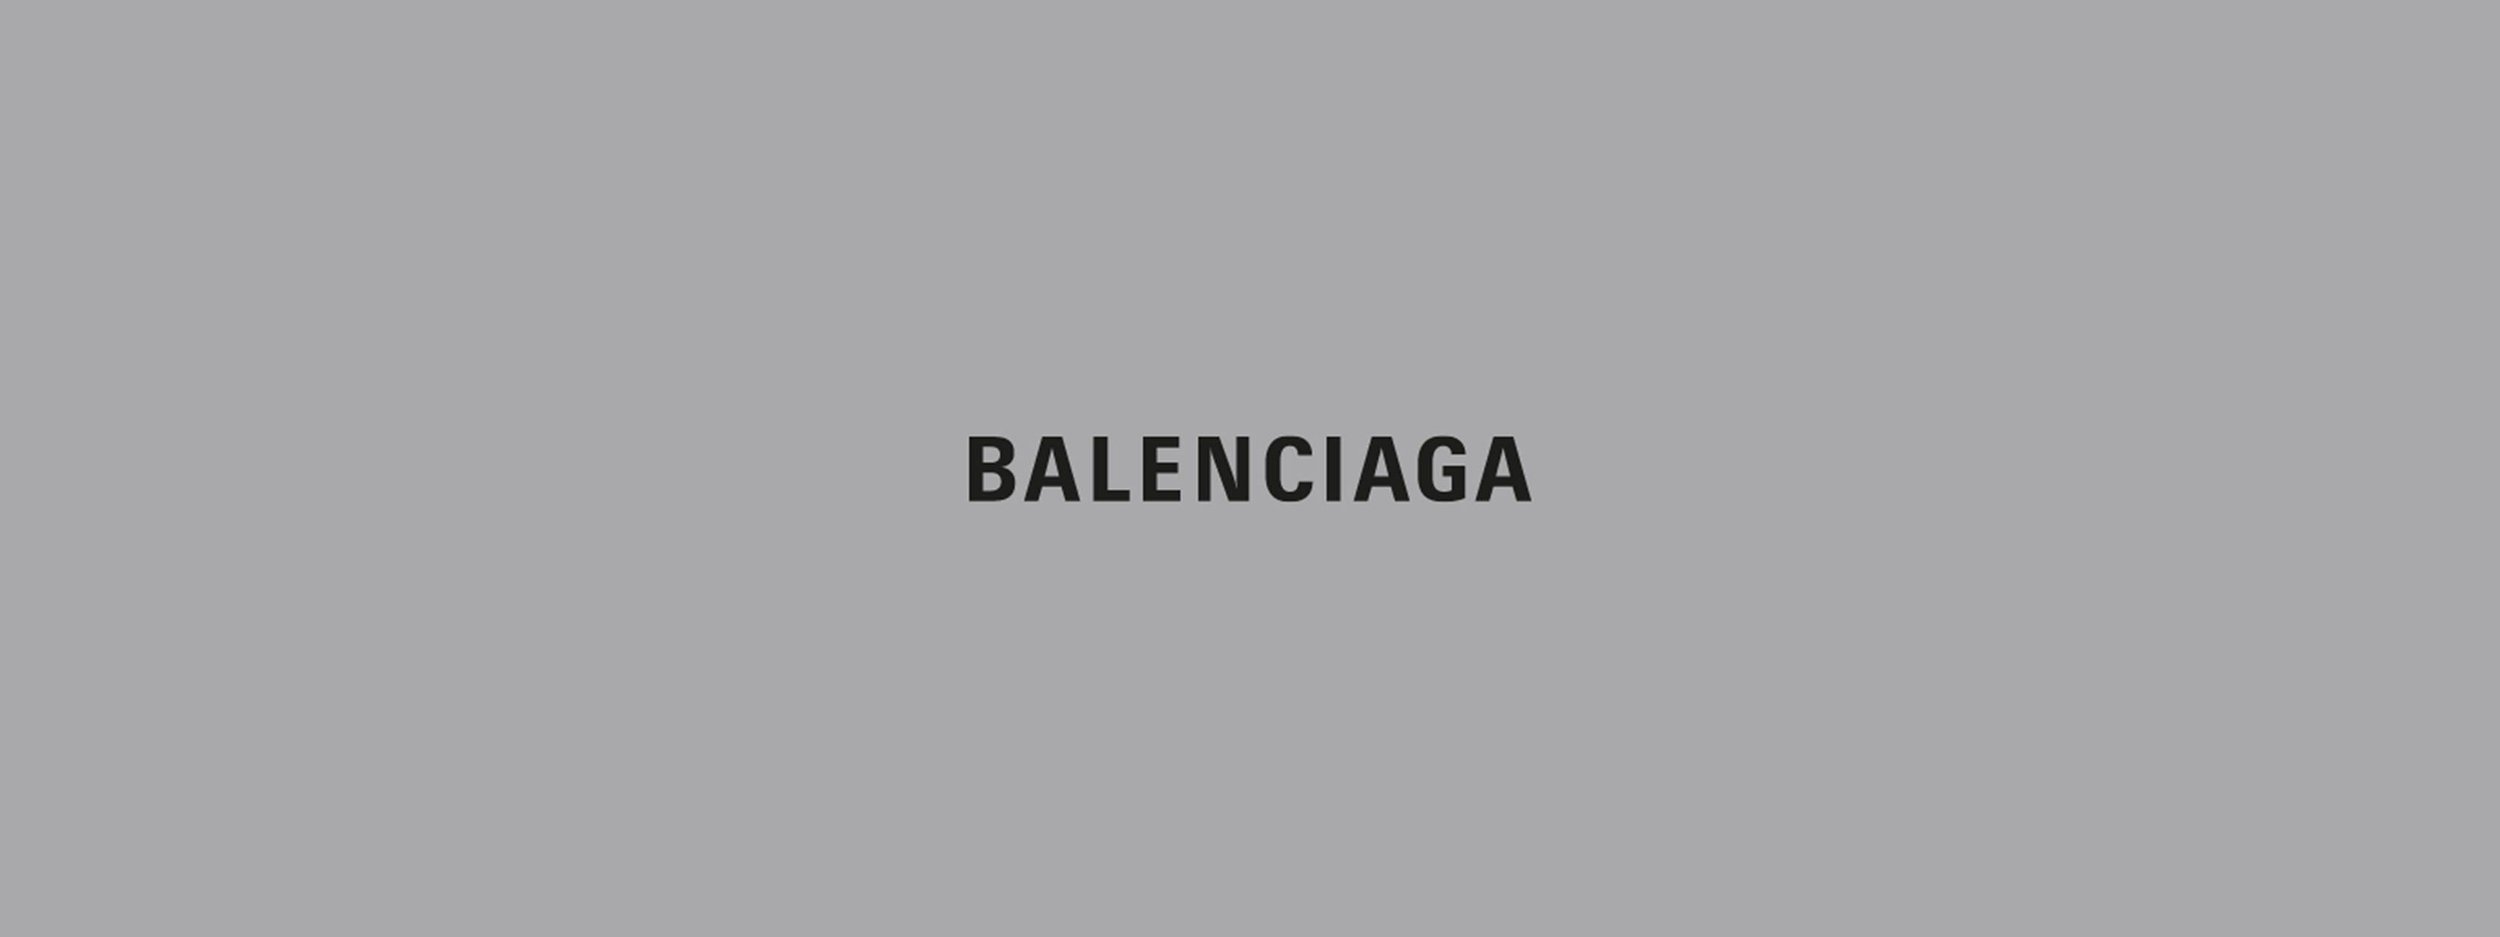 Balenciagabackground_Viva.jpg